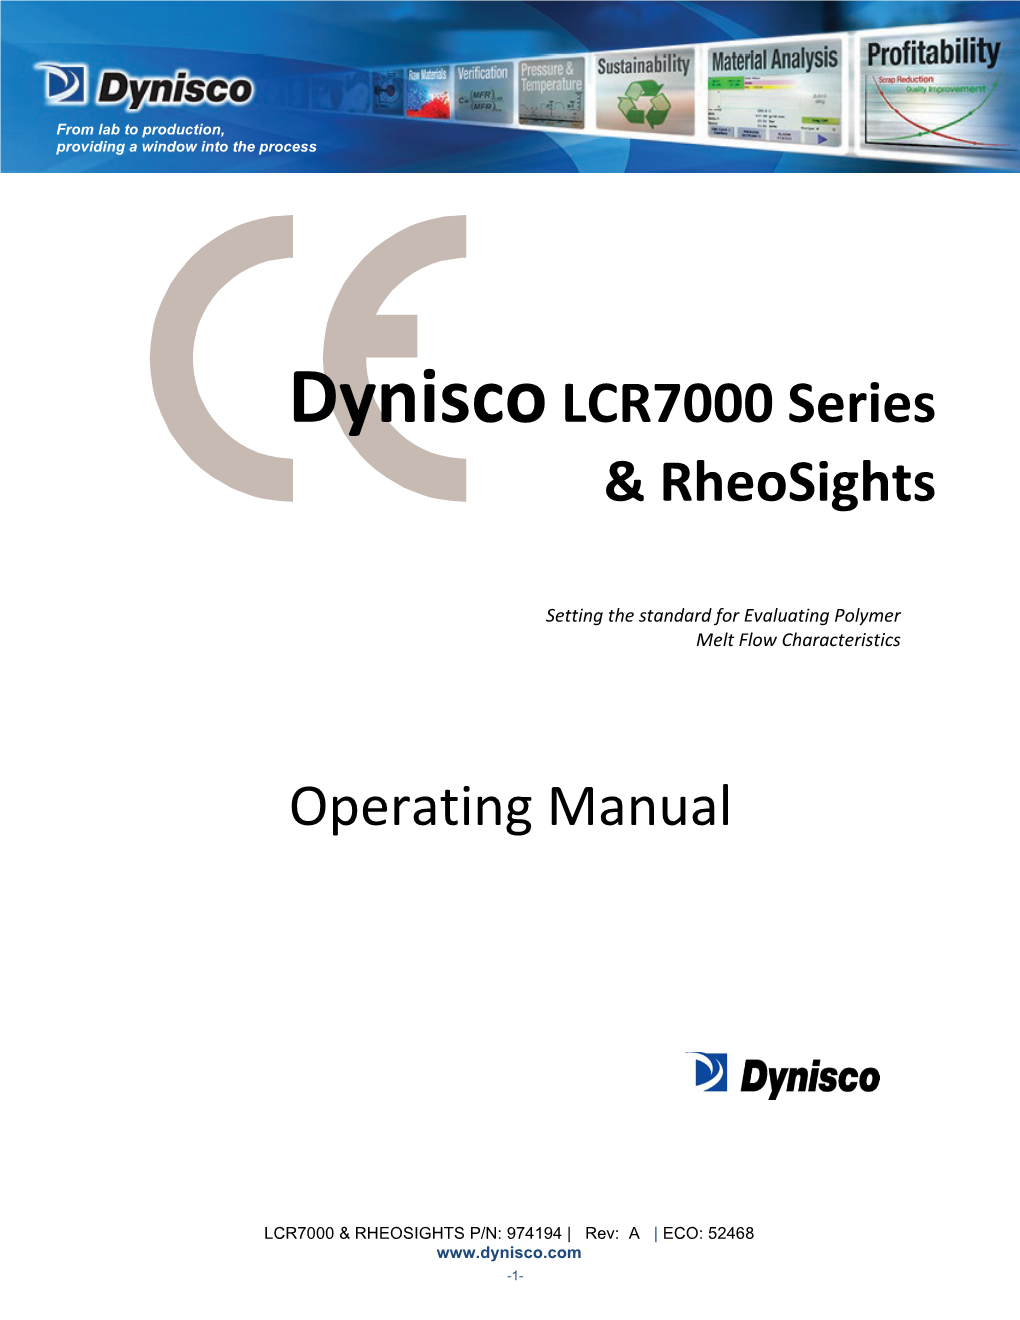 Operating Manual Dyniscolcr7000 Series & Rheosights